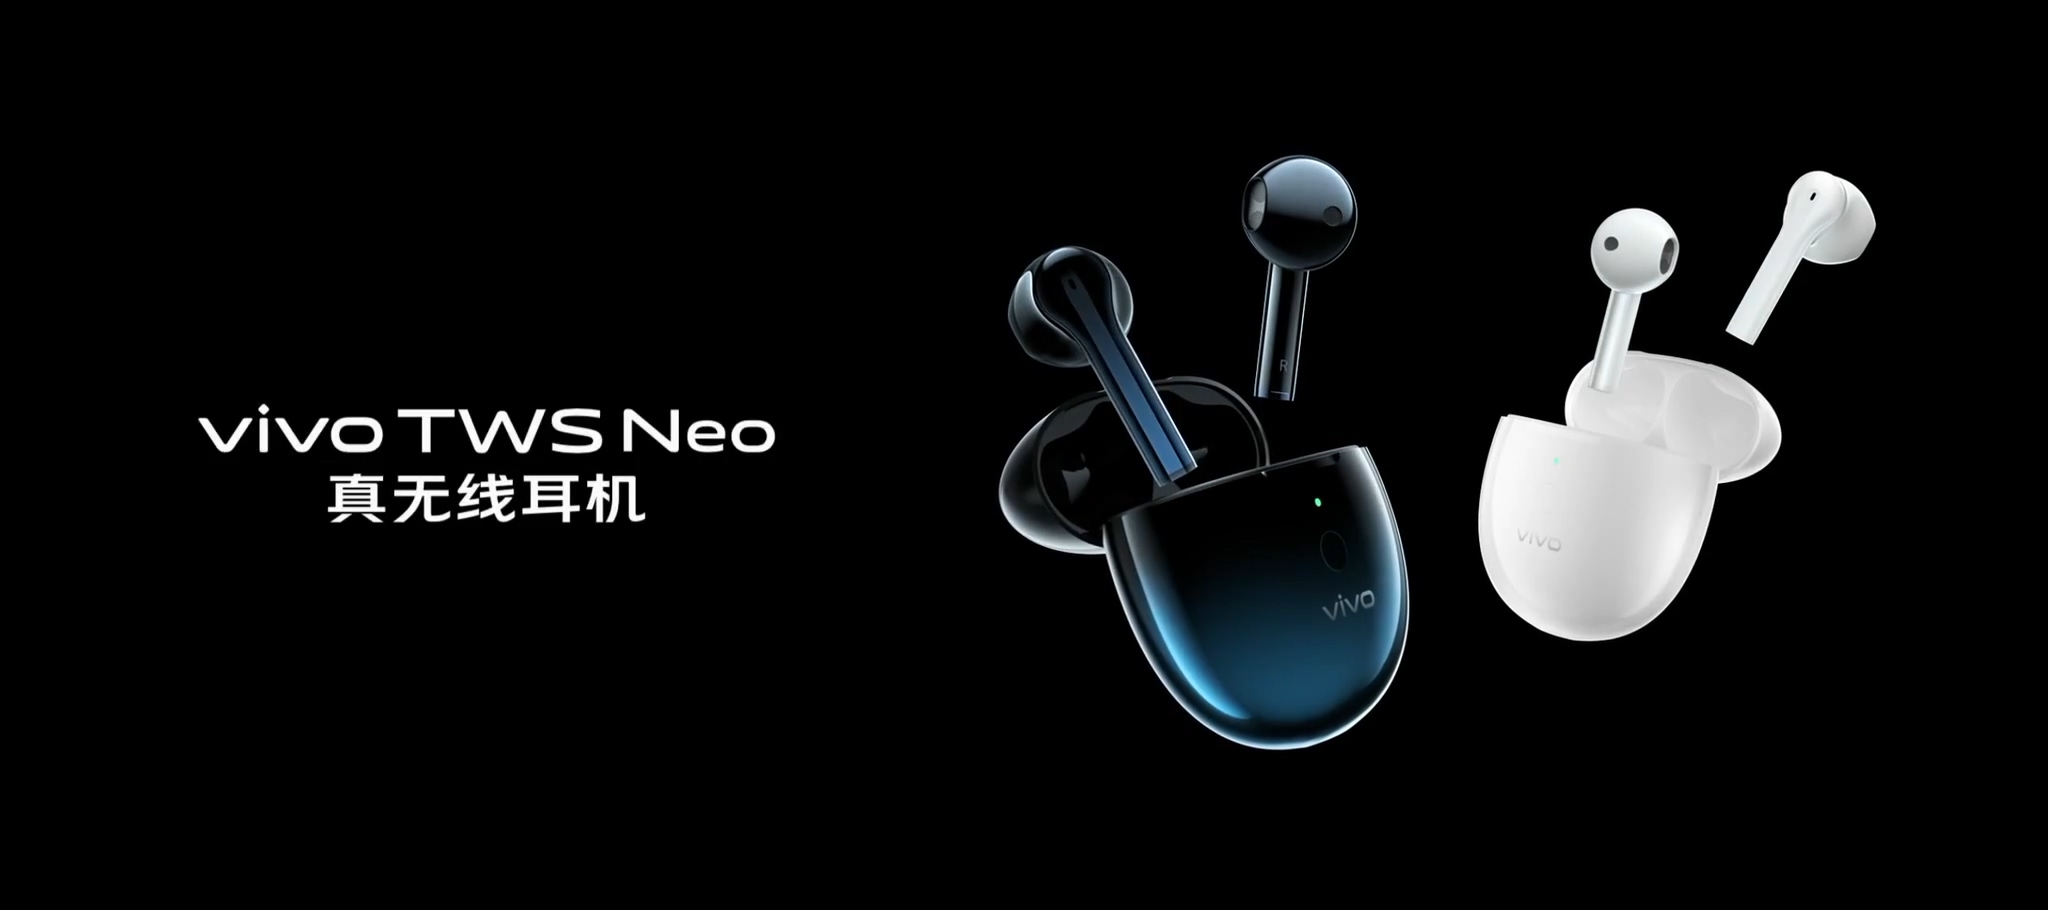 VIVO TWS Neo无线蓝牙耳机-超多震撼的镜头